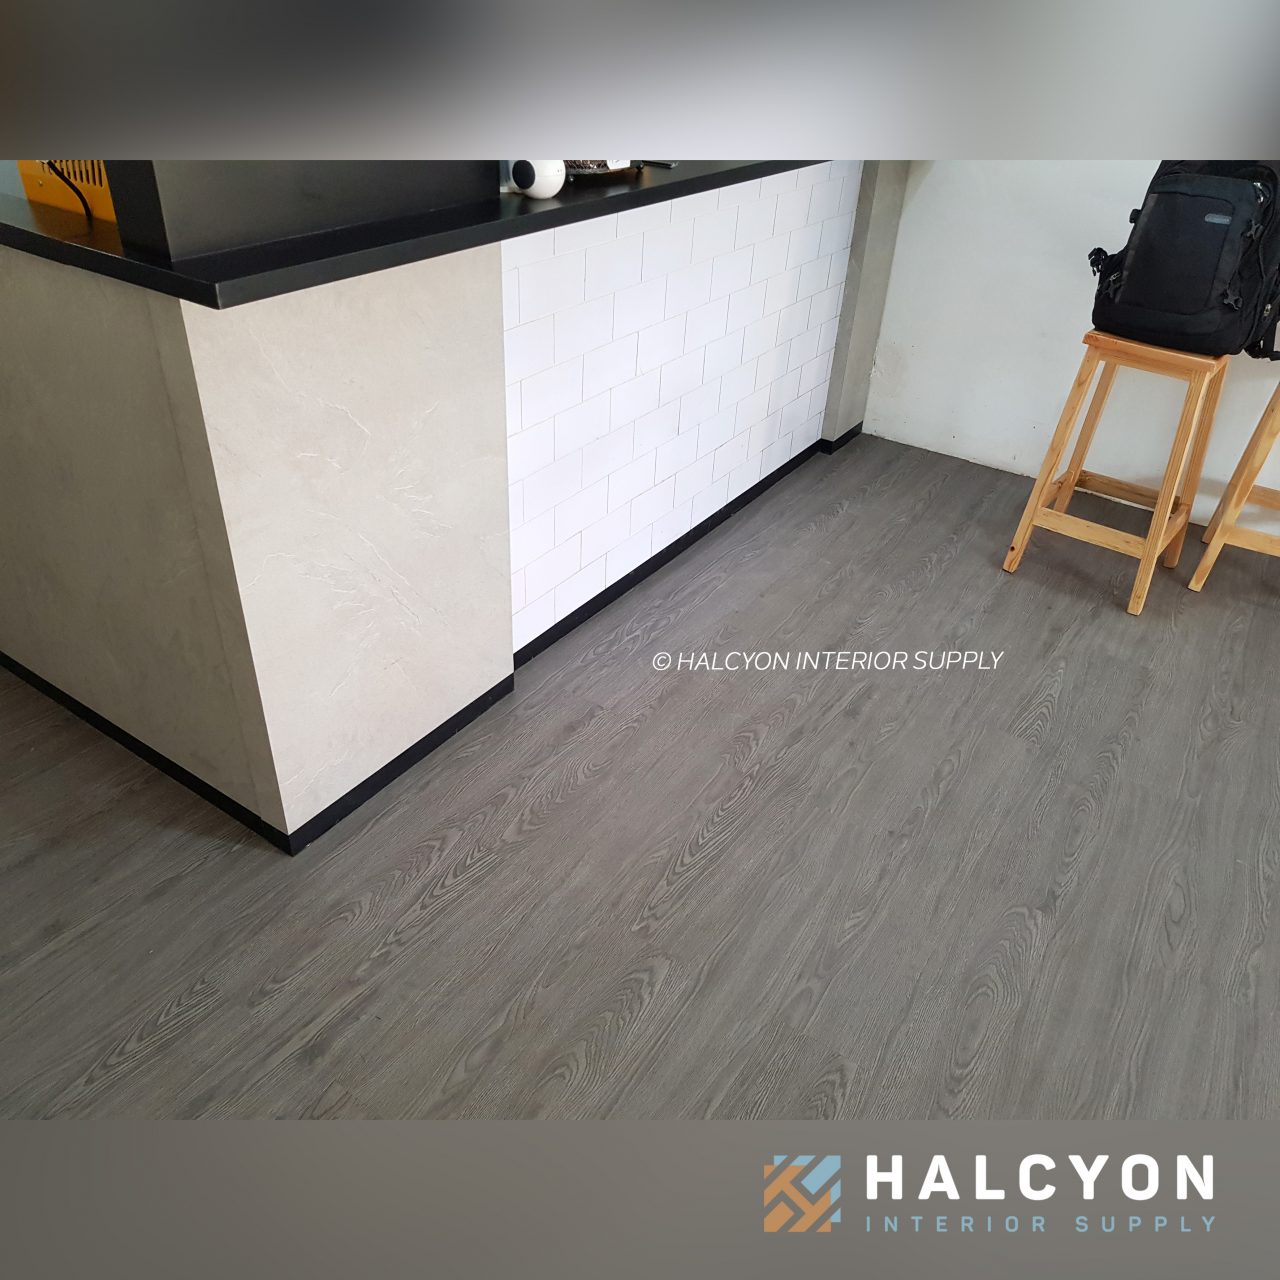 PLV15_5 by halcyon interior supply